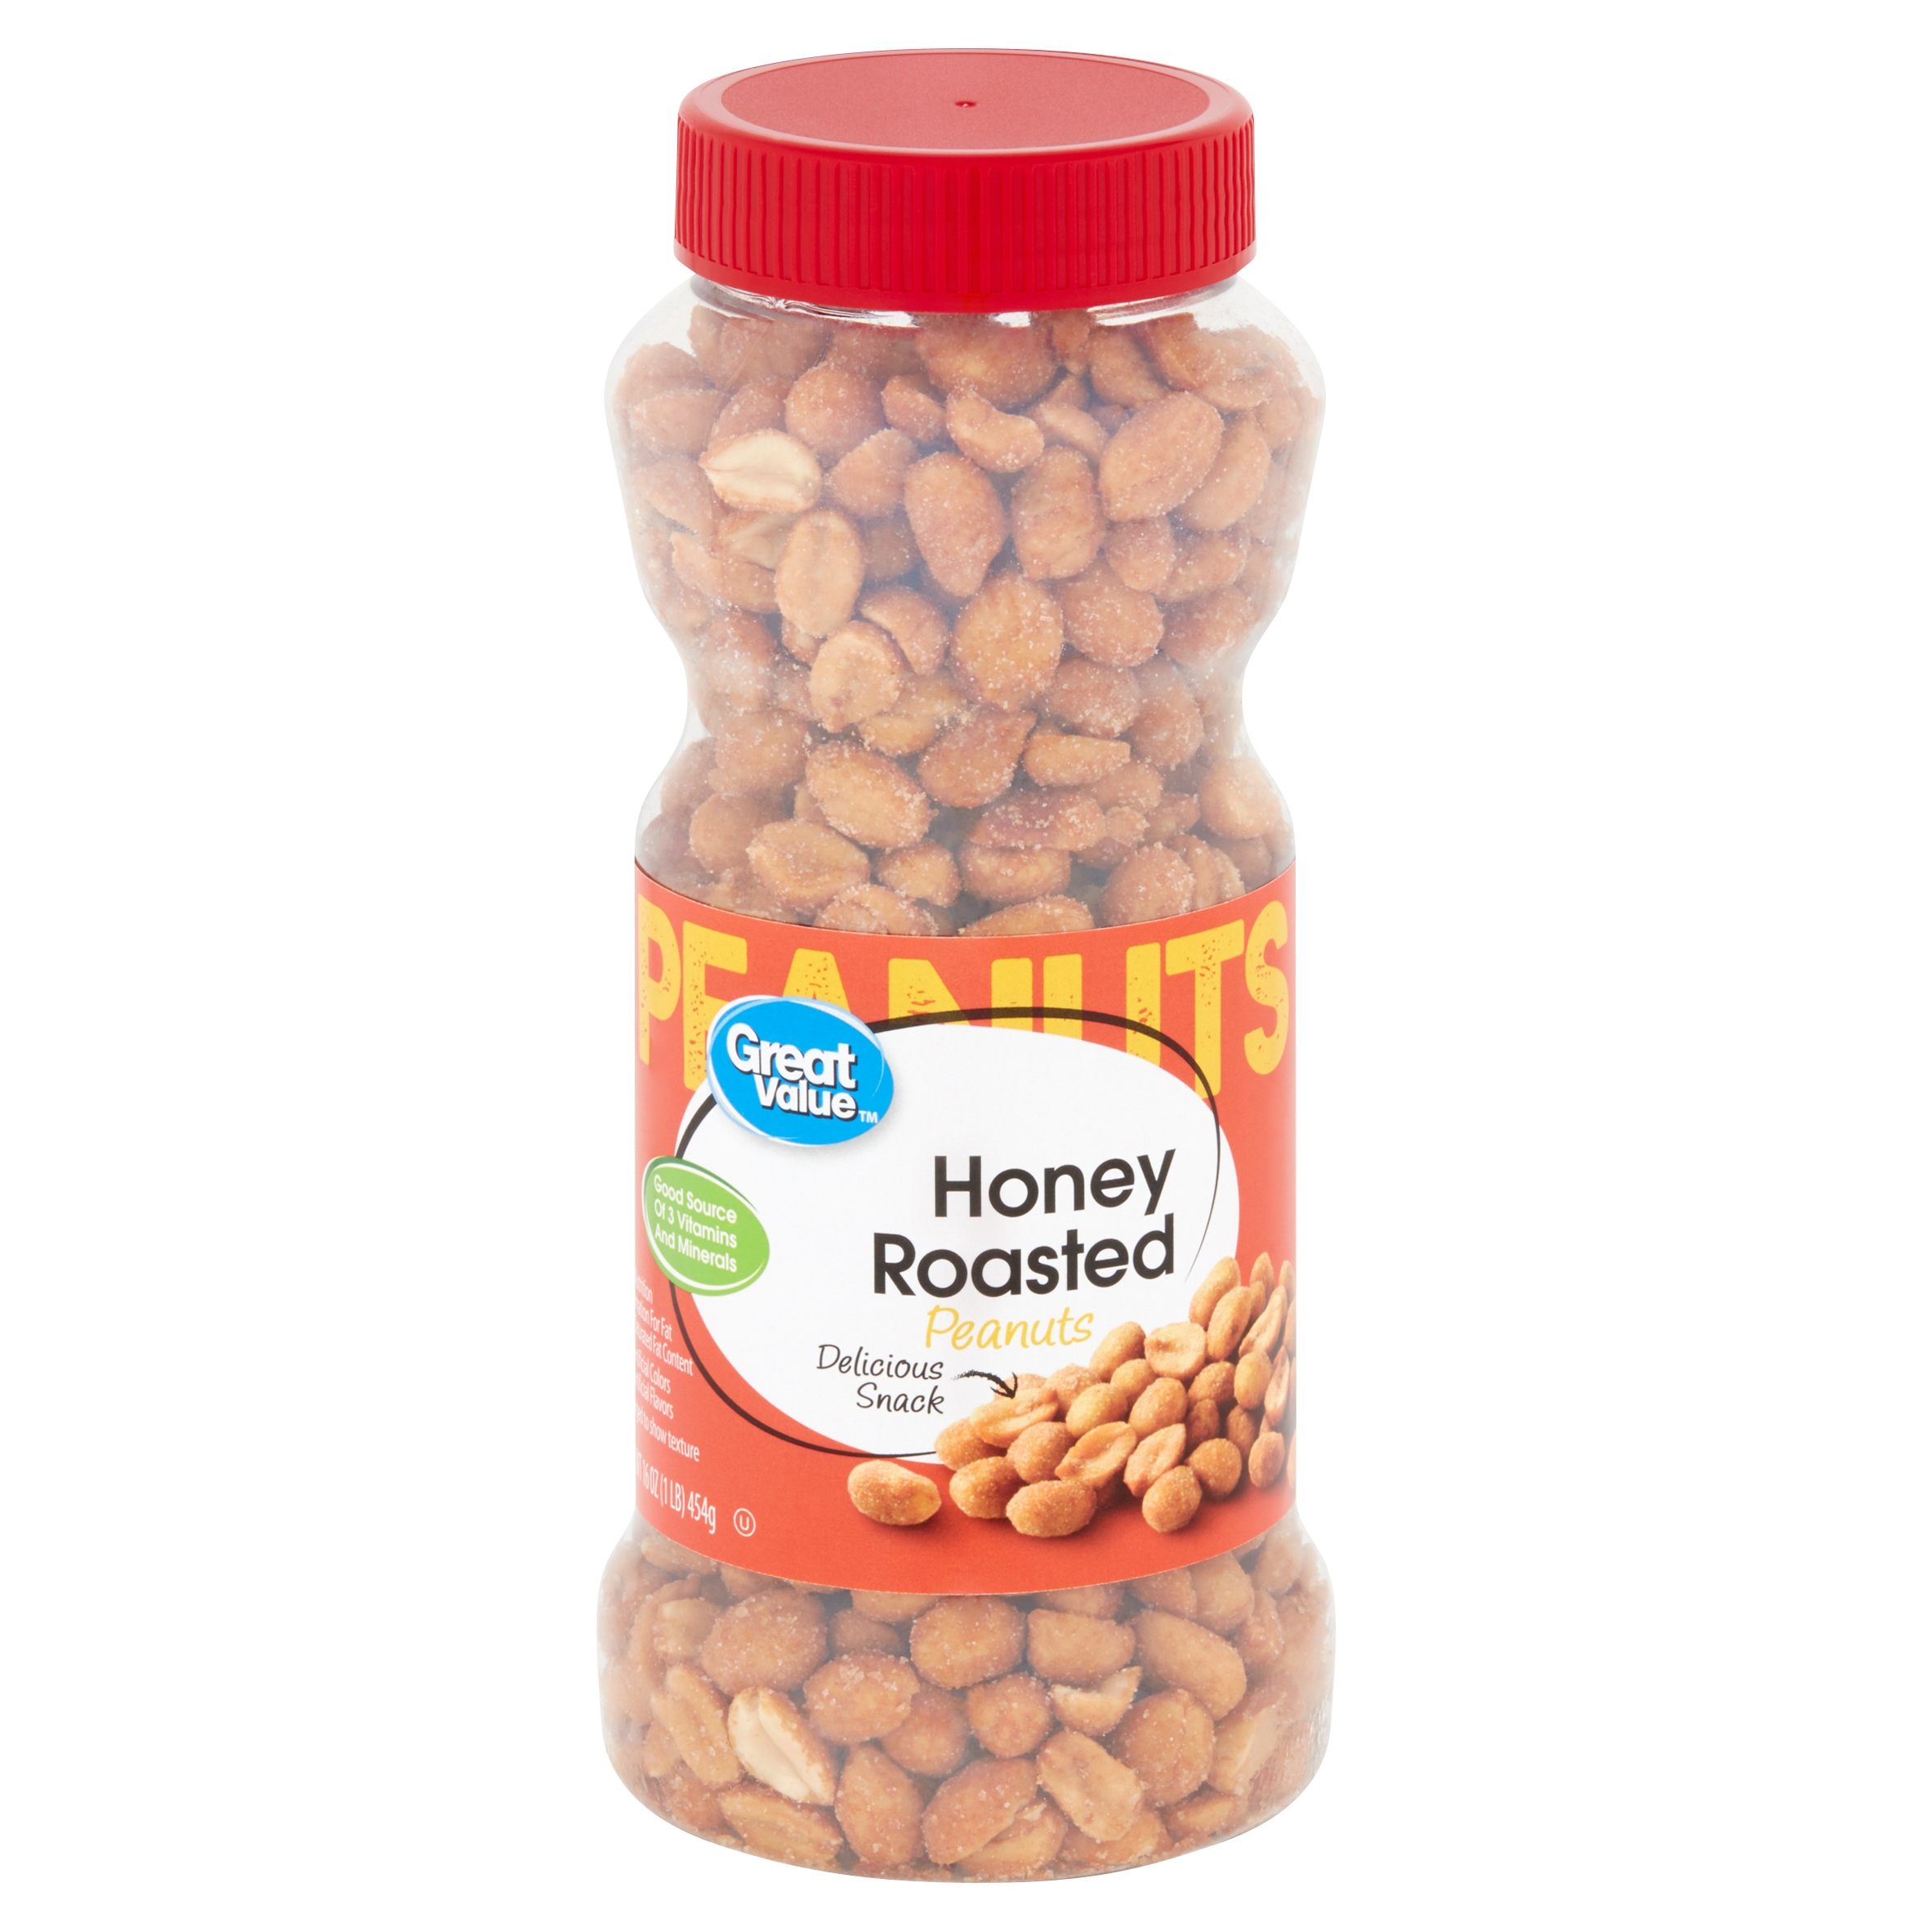 Great Value Honey Roasted Peanuts, 16 Oz. Image